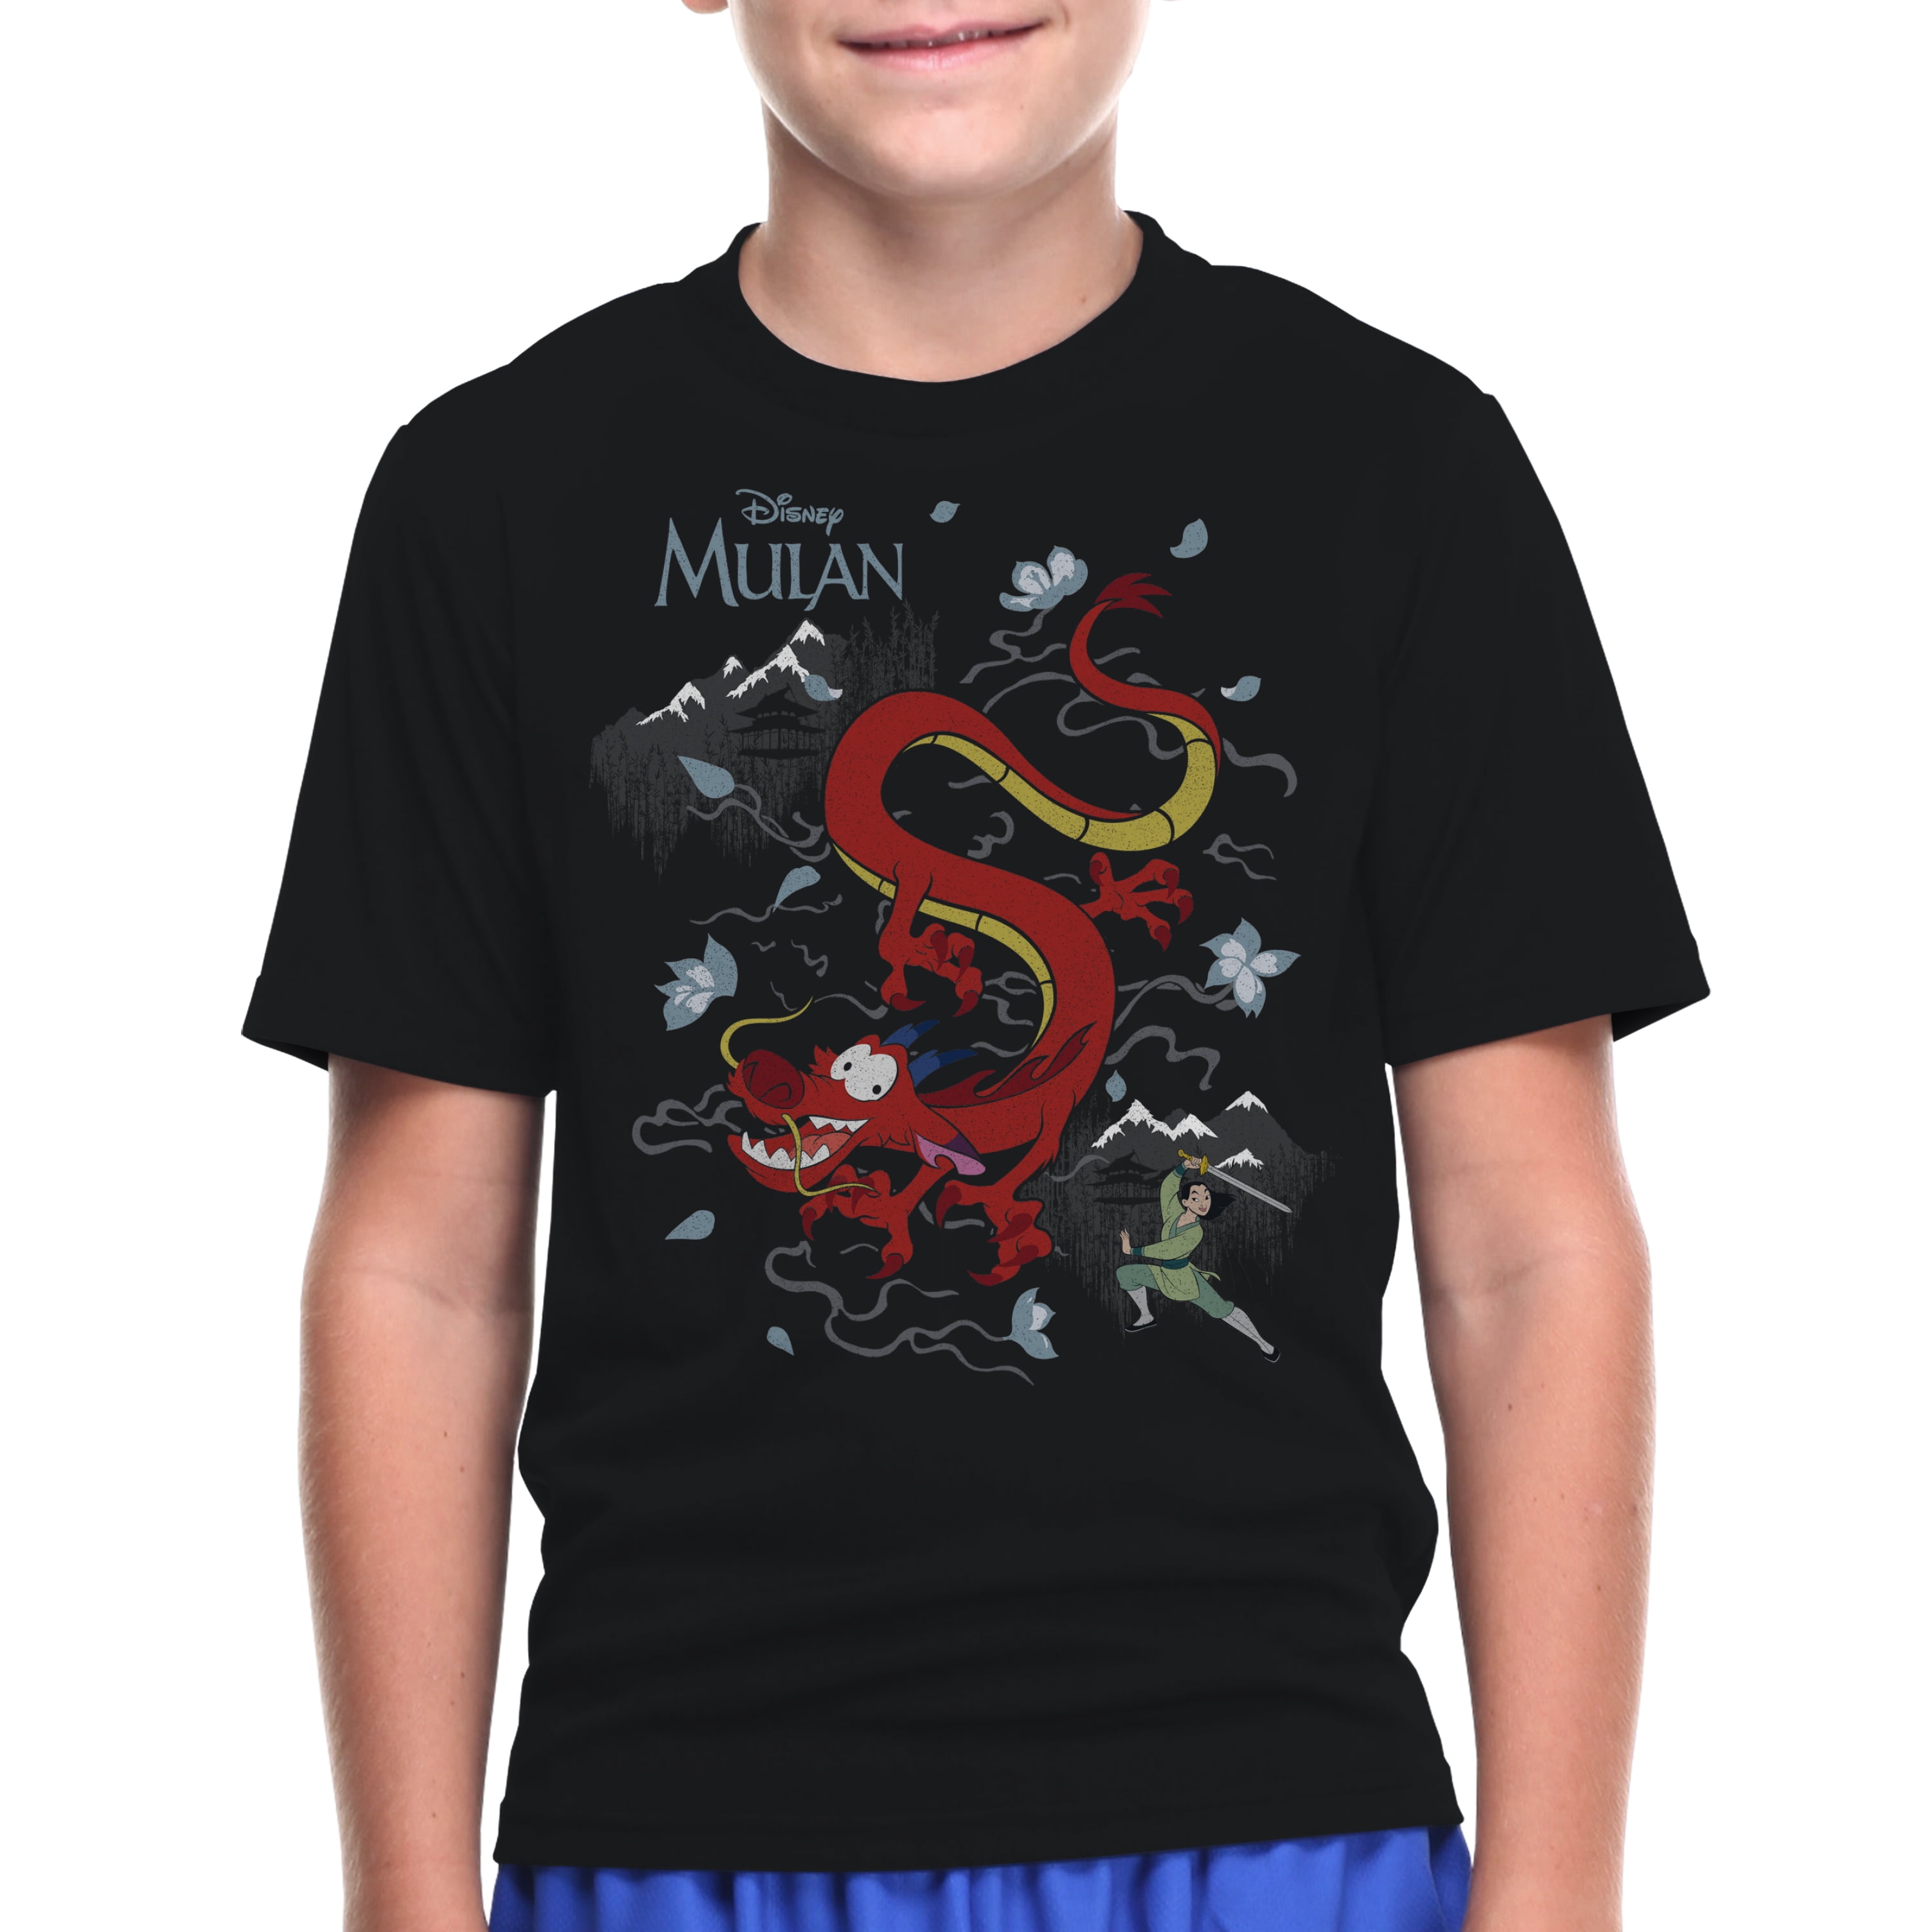 Disney Mulan Graphic 4-18 Sleeve Mulandia Boys Scene T-Shirt Short